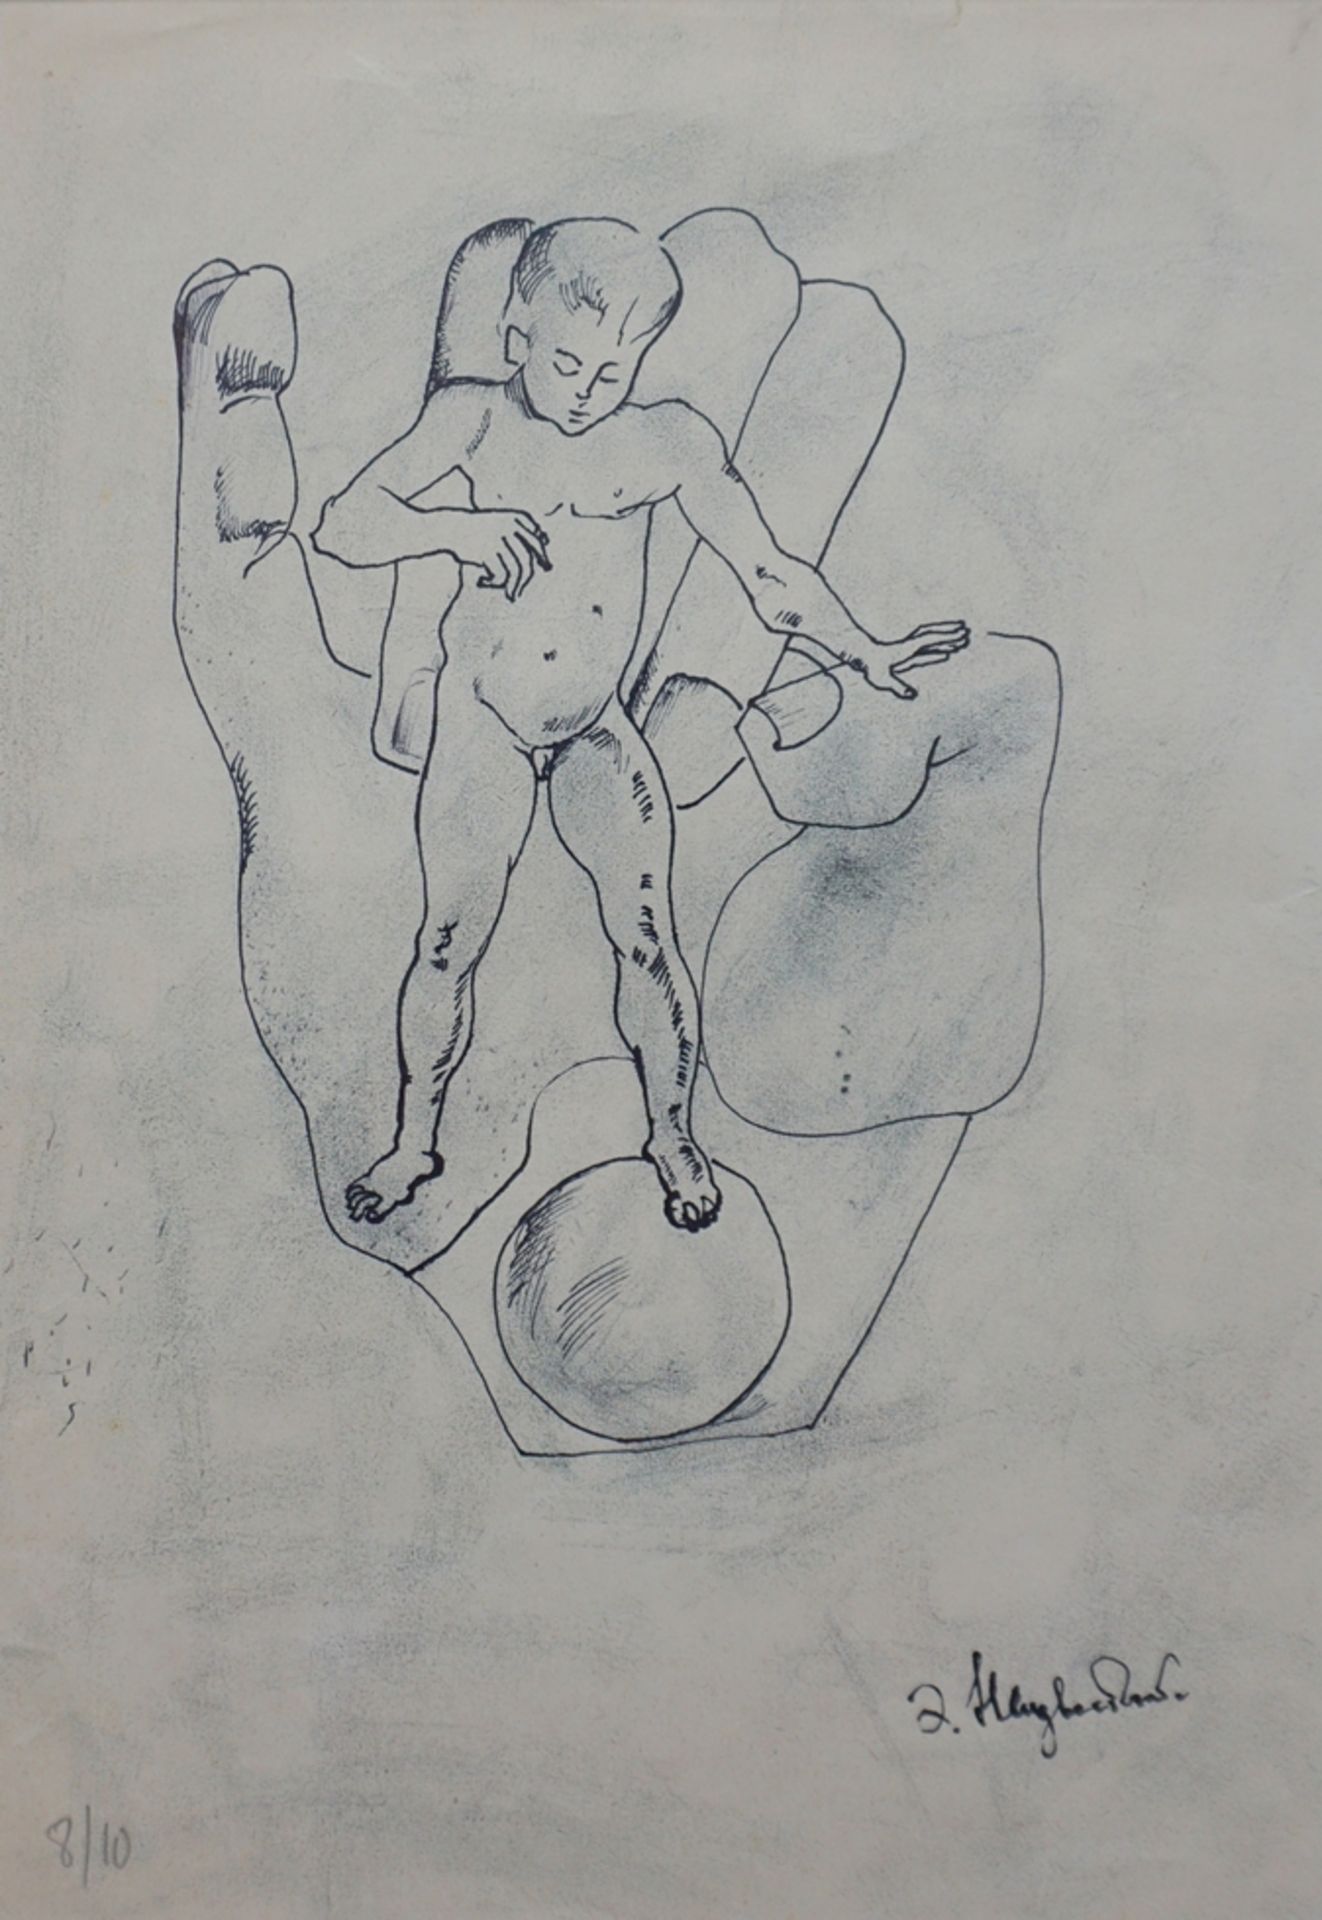 Ernst Neizvestny (1925, Sverdlovsk/RUS - 2016, New York/USA), "Hand mit Jungen“, Lithografie